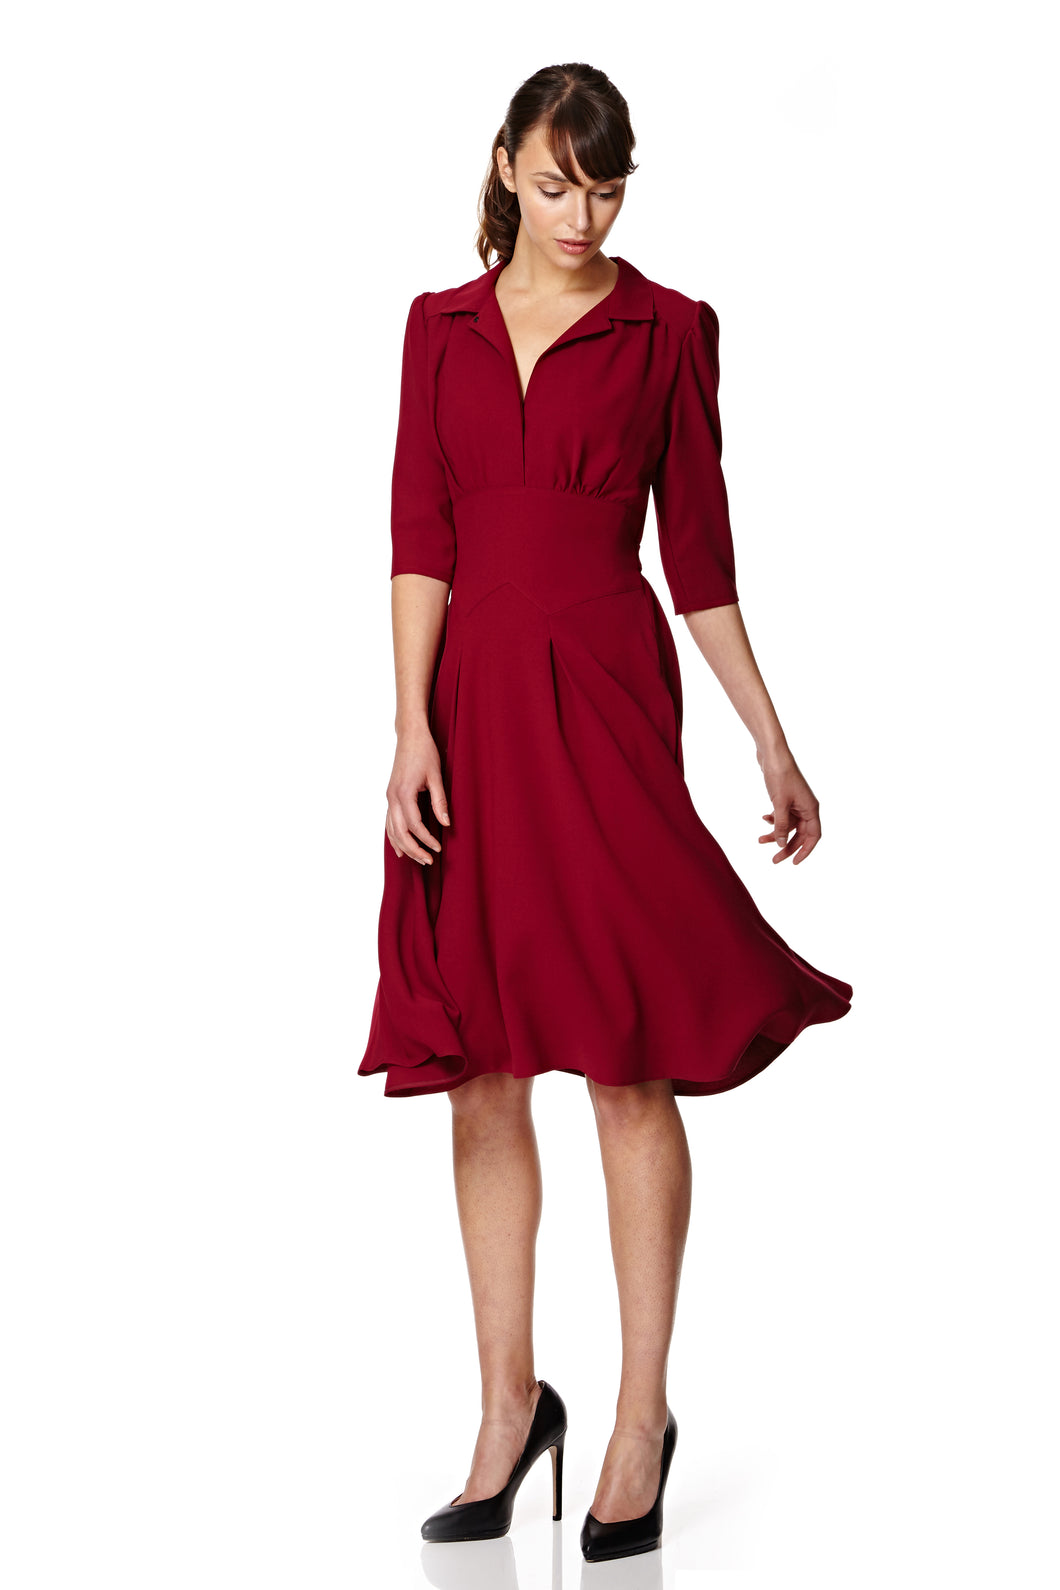 The Dorothy dress in burgundy crepe